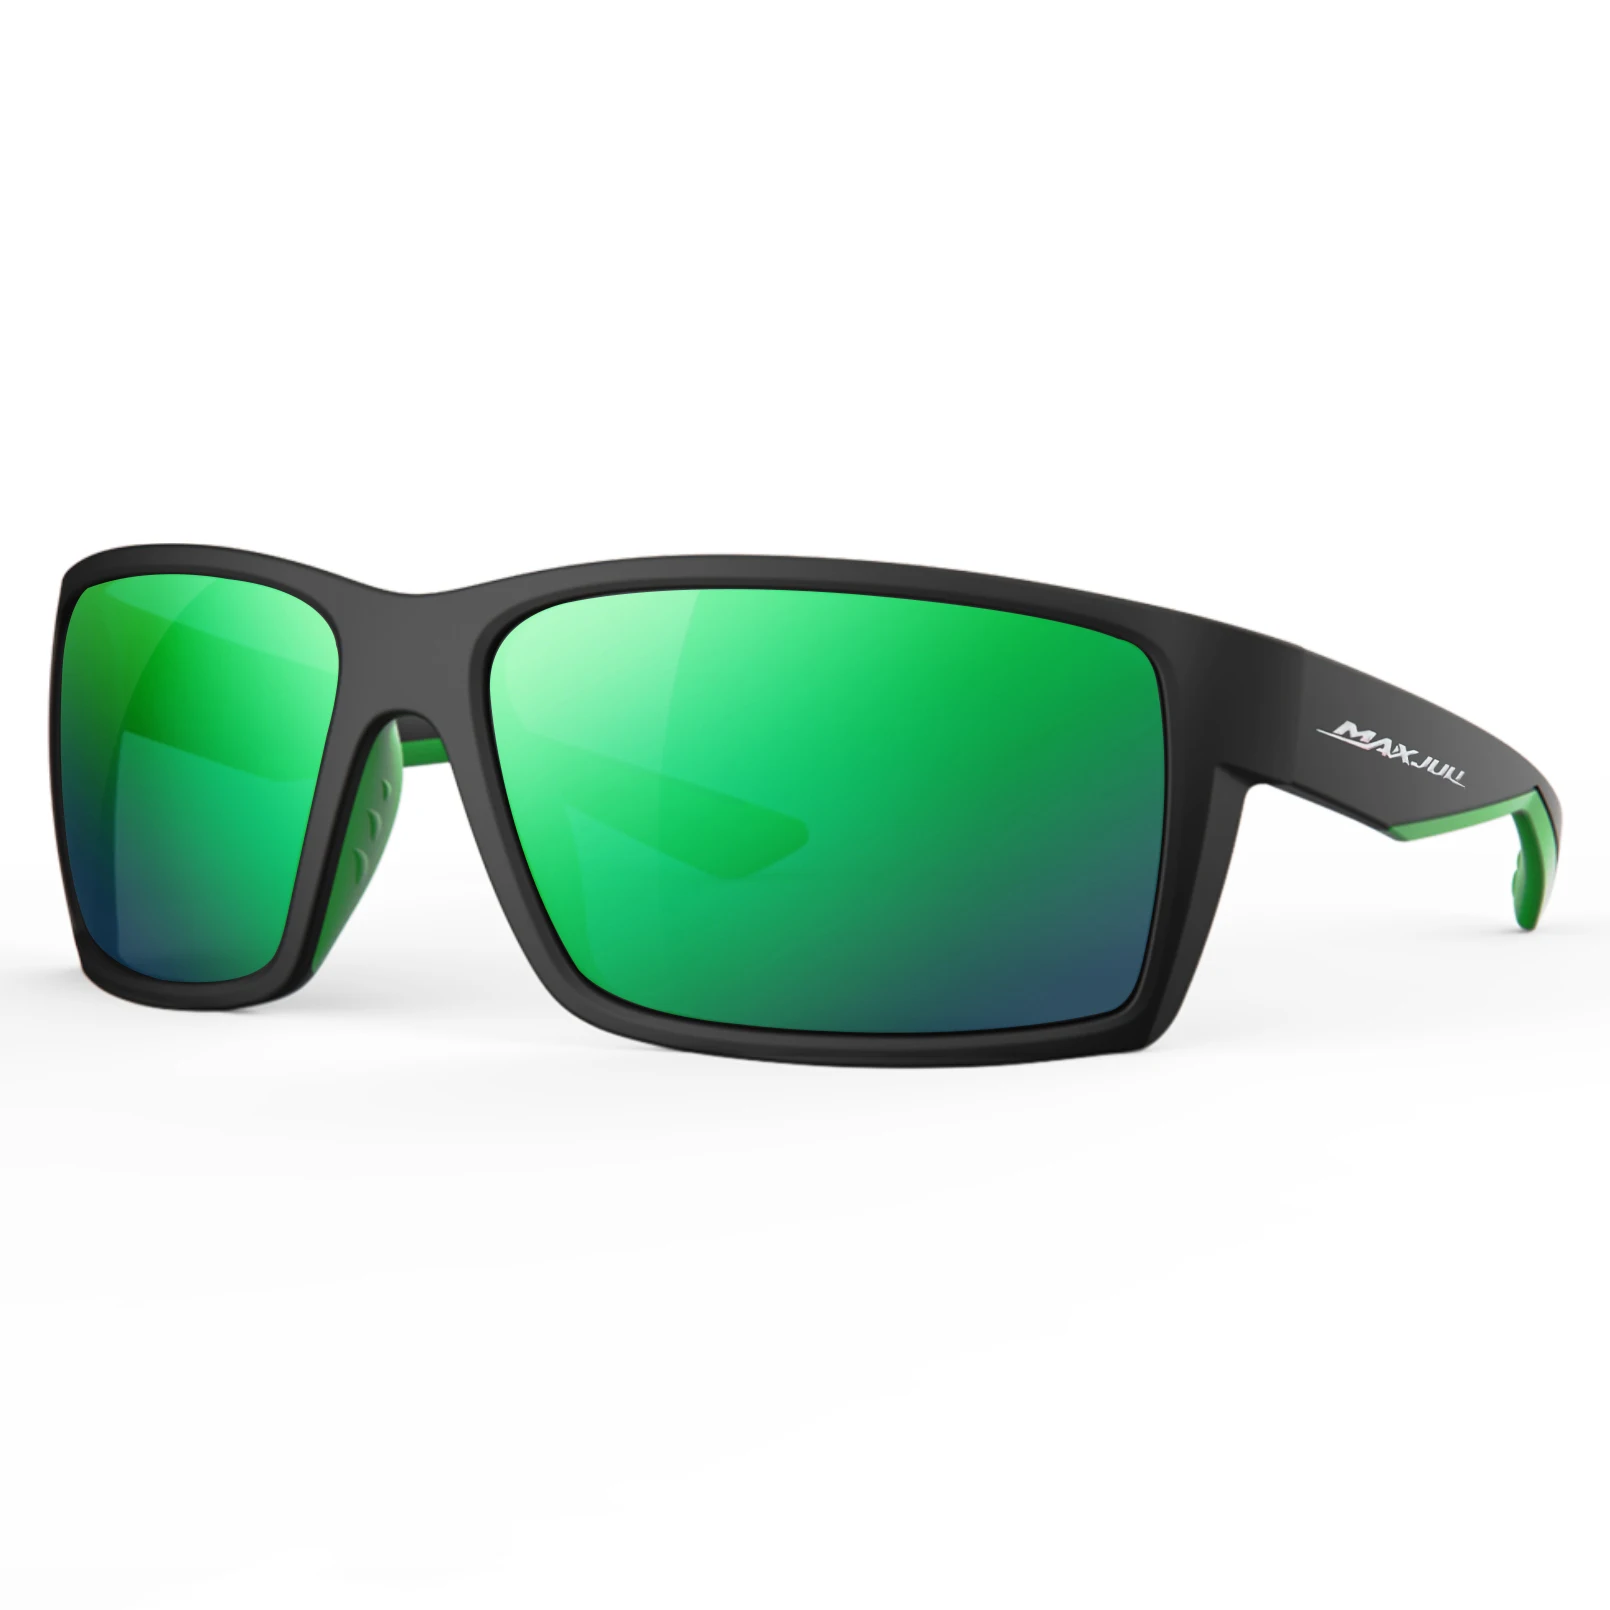 MAXJULI Rectangular Polarized Sunglasses for Men Women,Sport Sun Glasses,Cycling Glasses 8122 